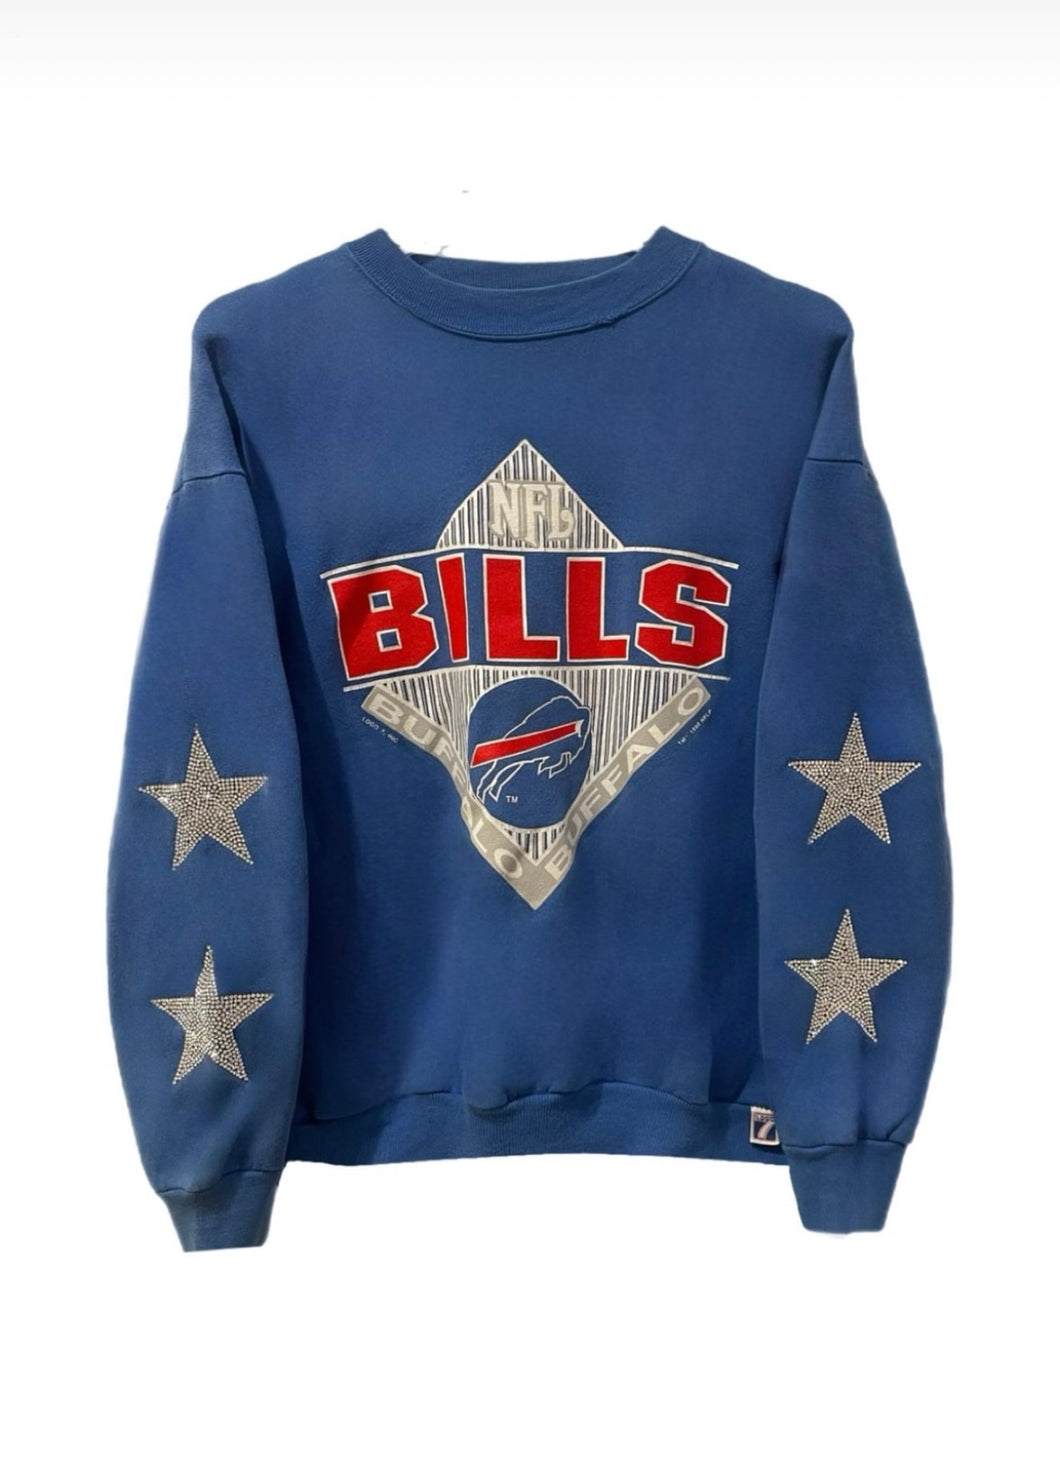 Buffalo Bills, NFL One of a KIND Vintage Sweatshirt with Crystal Star Design